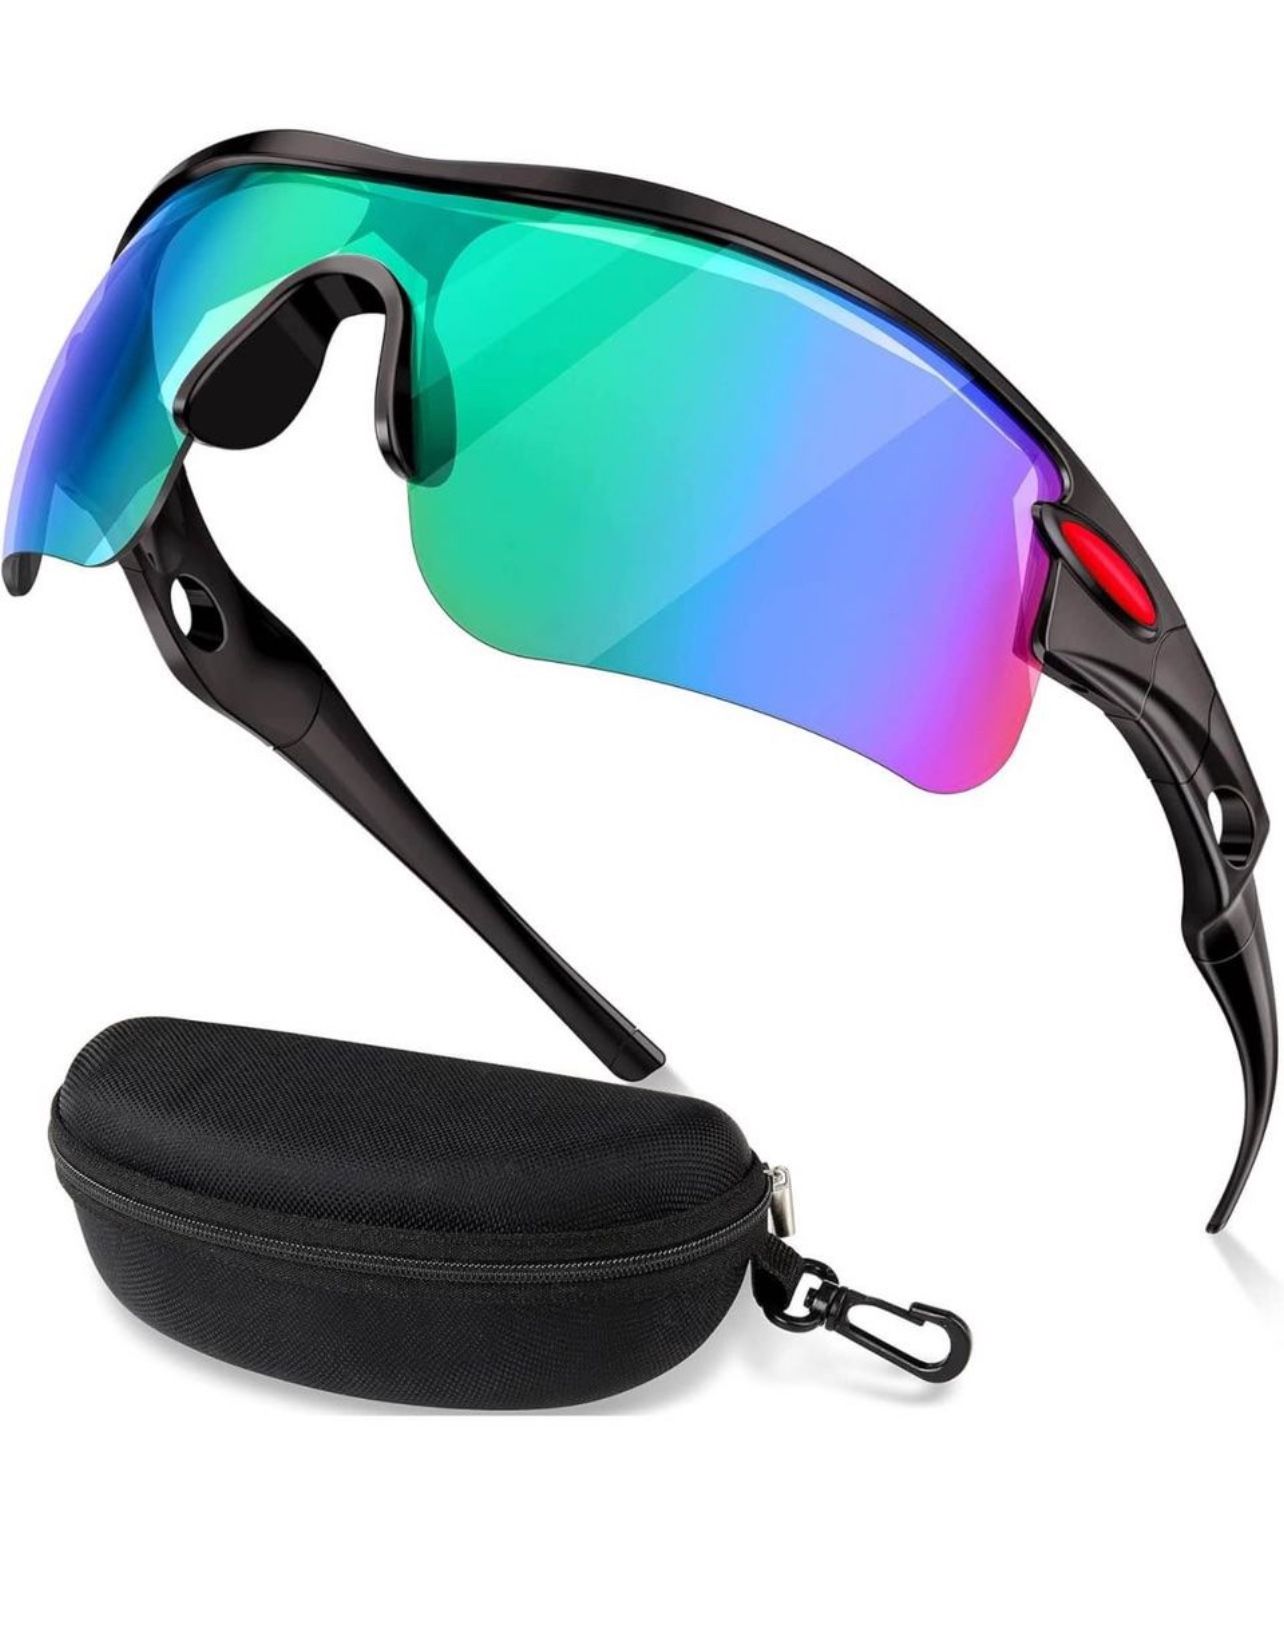 Brandnew Sports Sunglasses for Men Women Youth Baseball Fishing Cycling Running Golf Motorcycle Glasses Sports Sunglasses-Black&ren